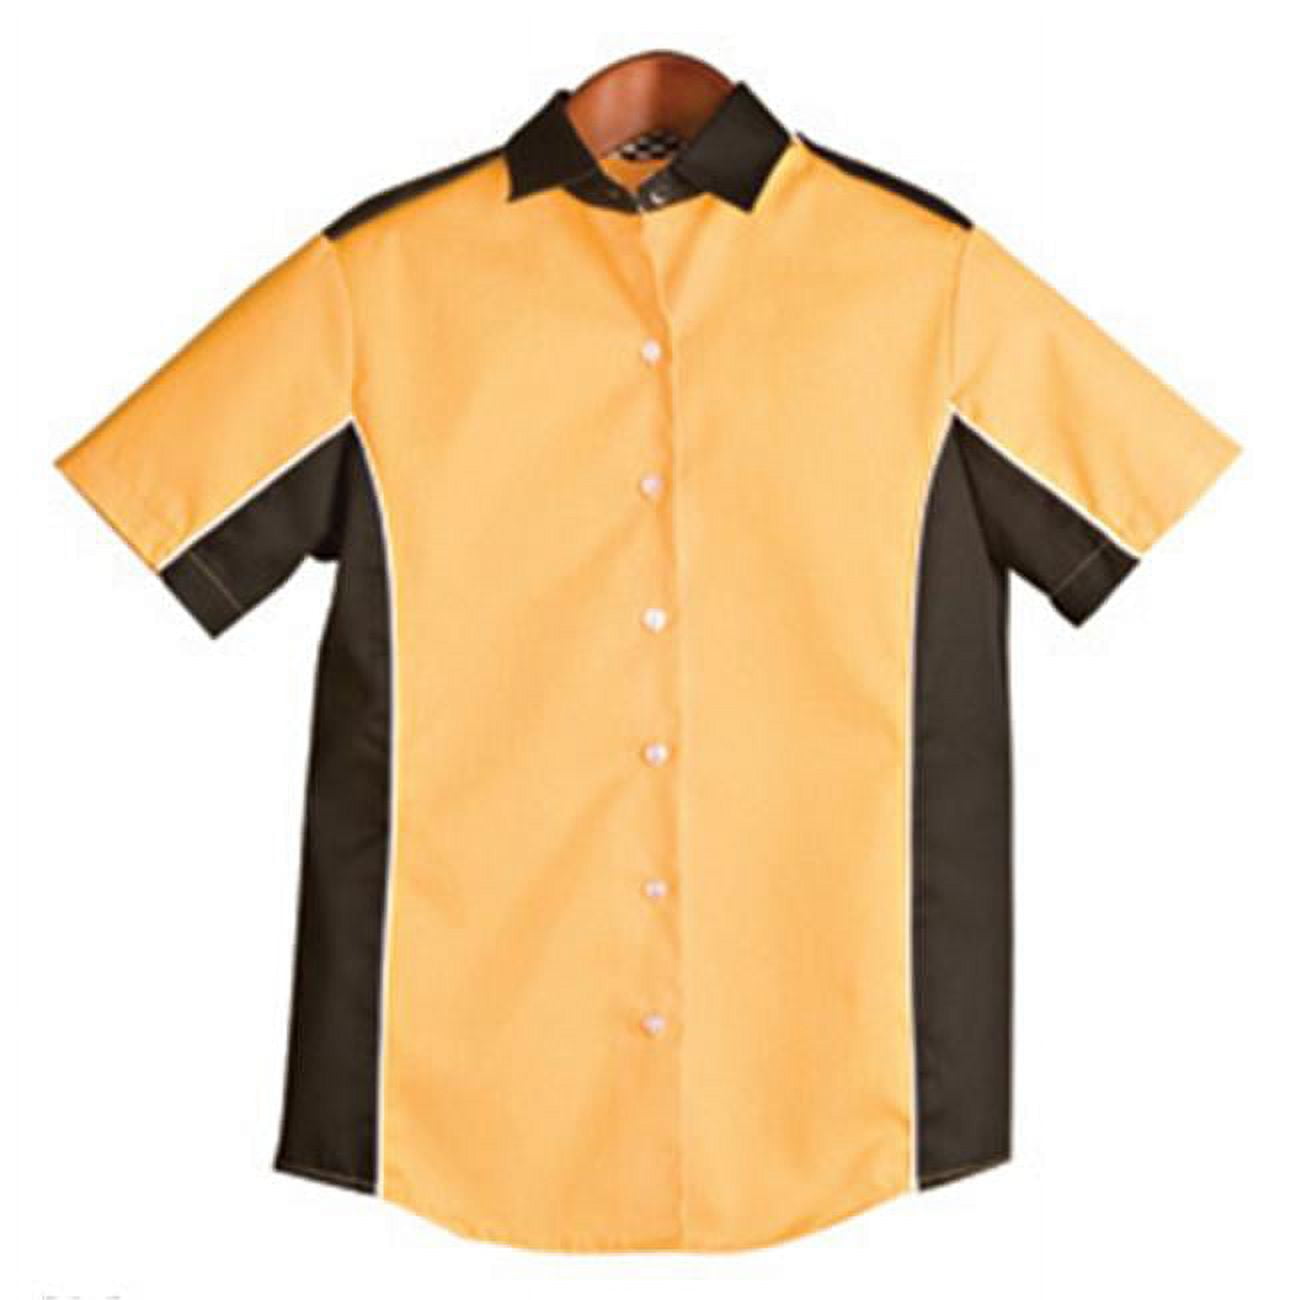 Hilton INFN Ladies Infineon Pit Crew Shirt, Gold & Black, Medium ...